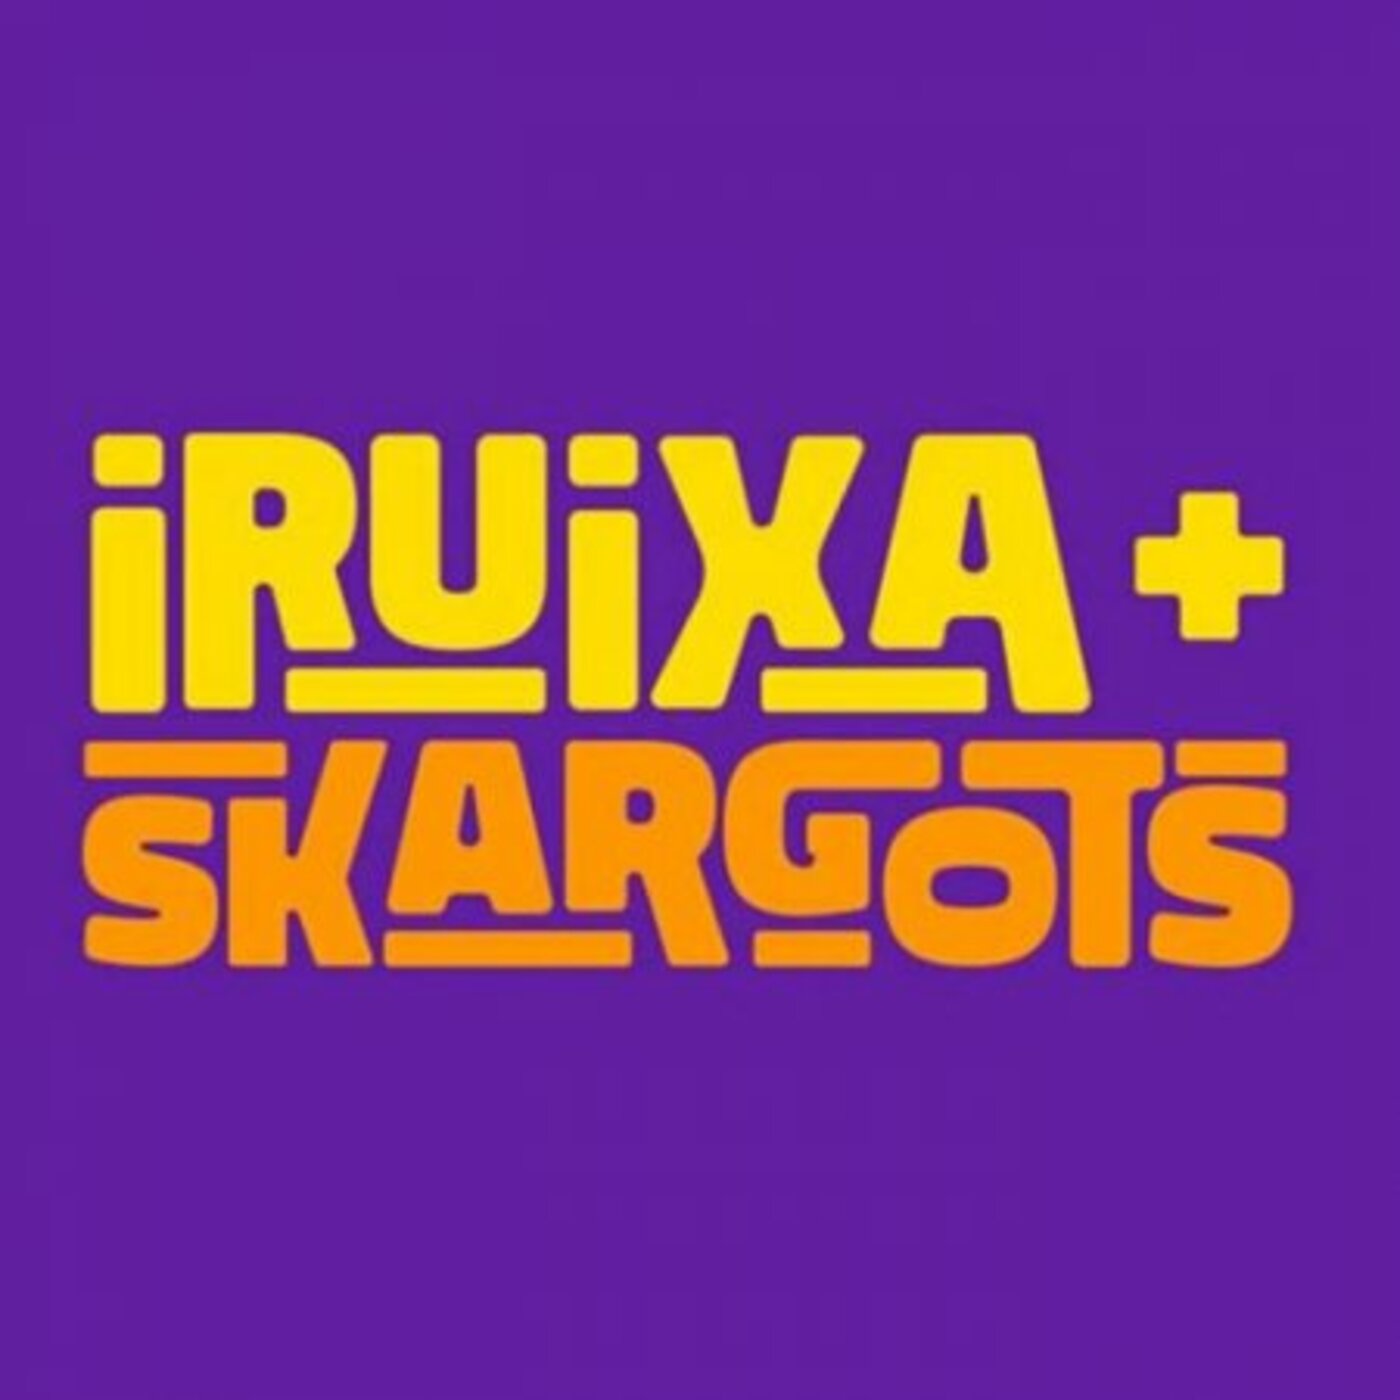 Iruixa i Skargots - Iruixa + Skargots | musica en valencià